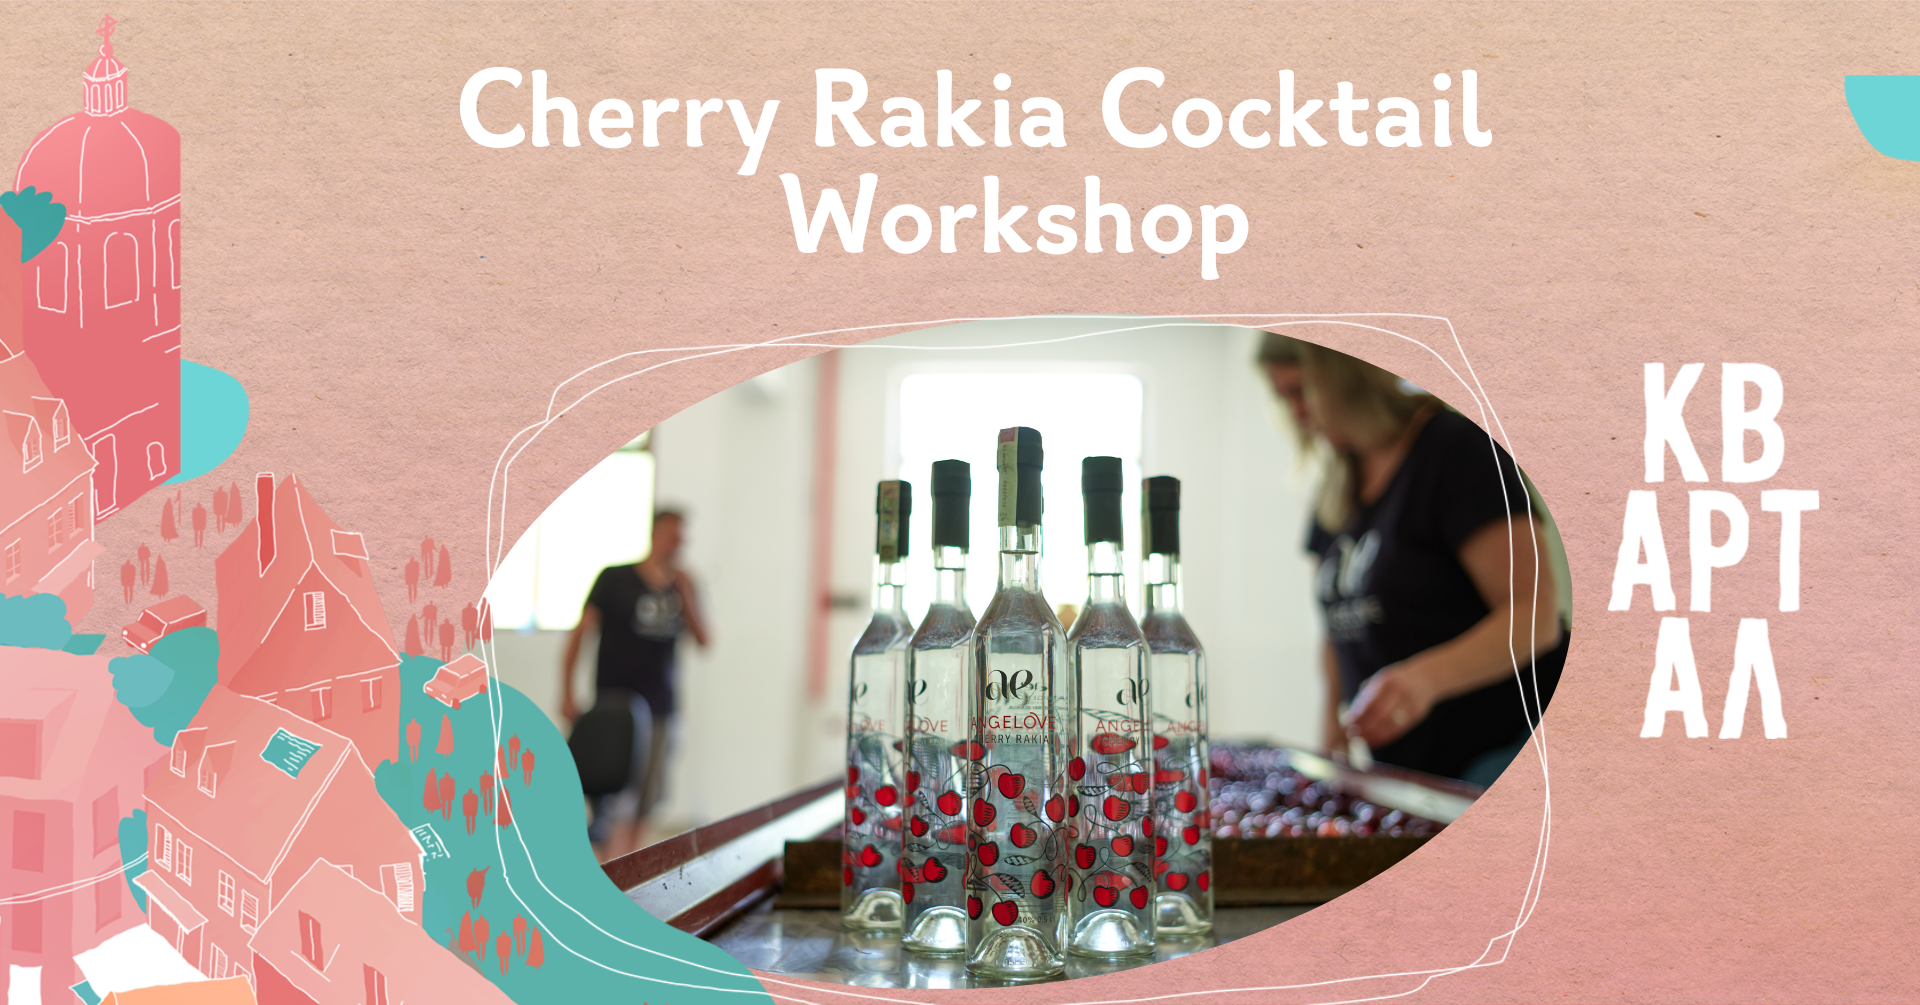 Cherry Rakia Cocktail Workshop (open-air)